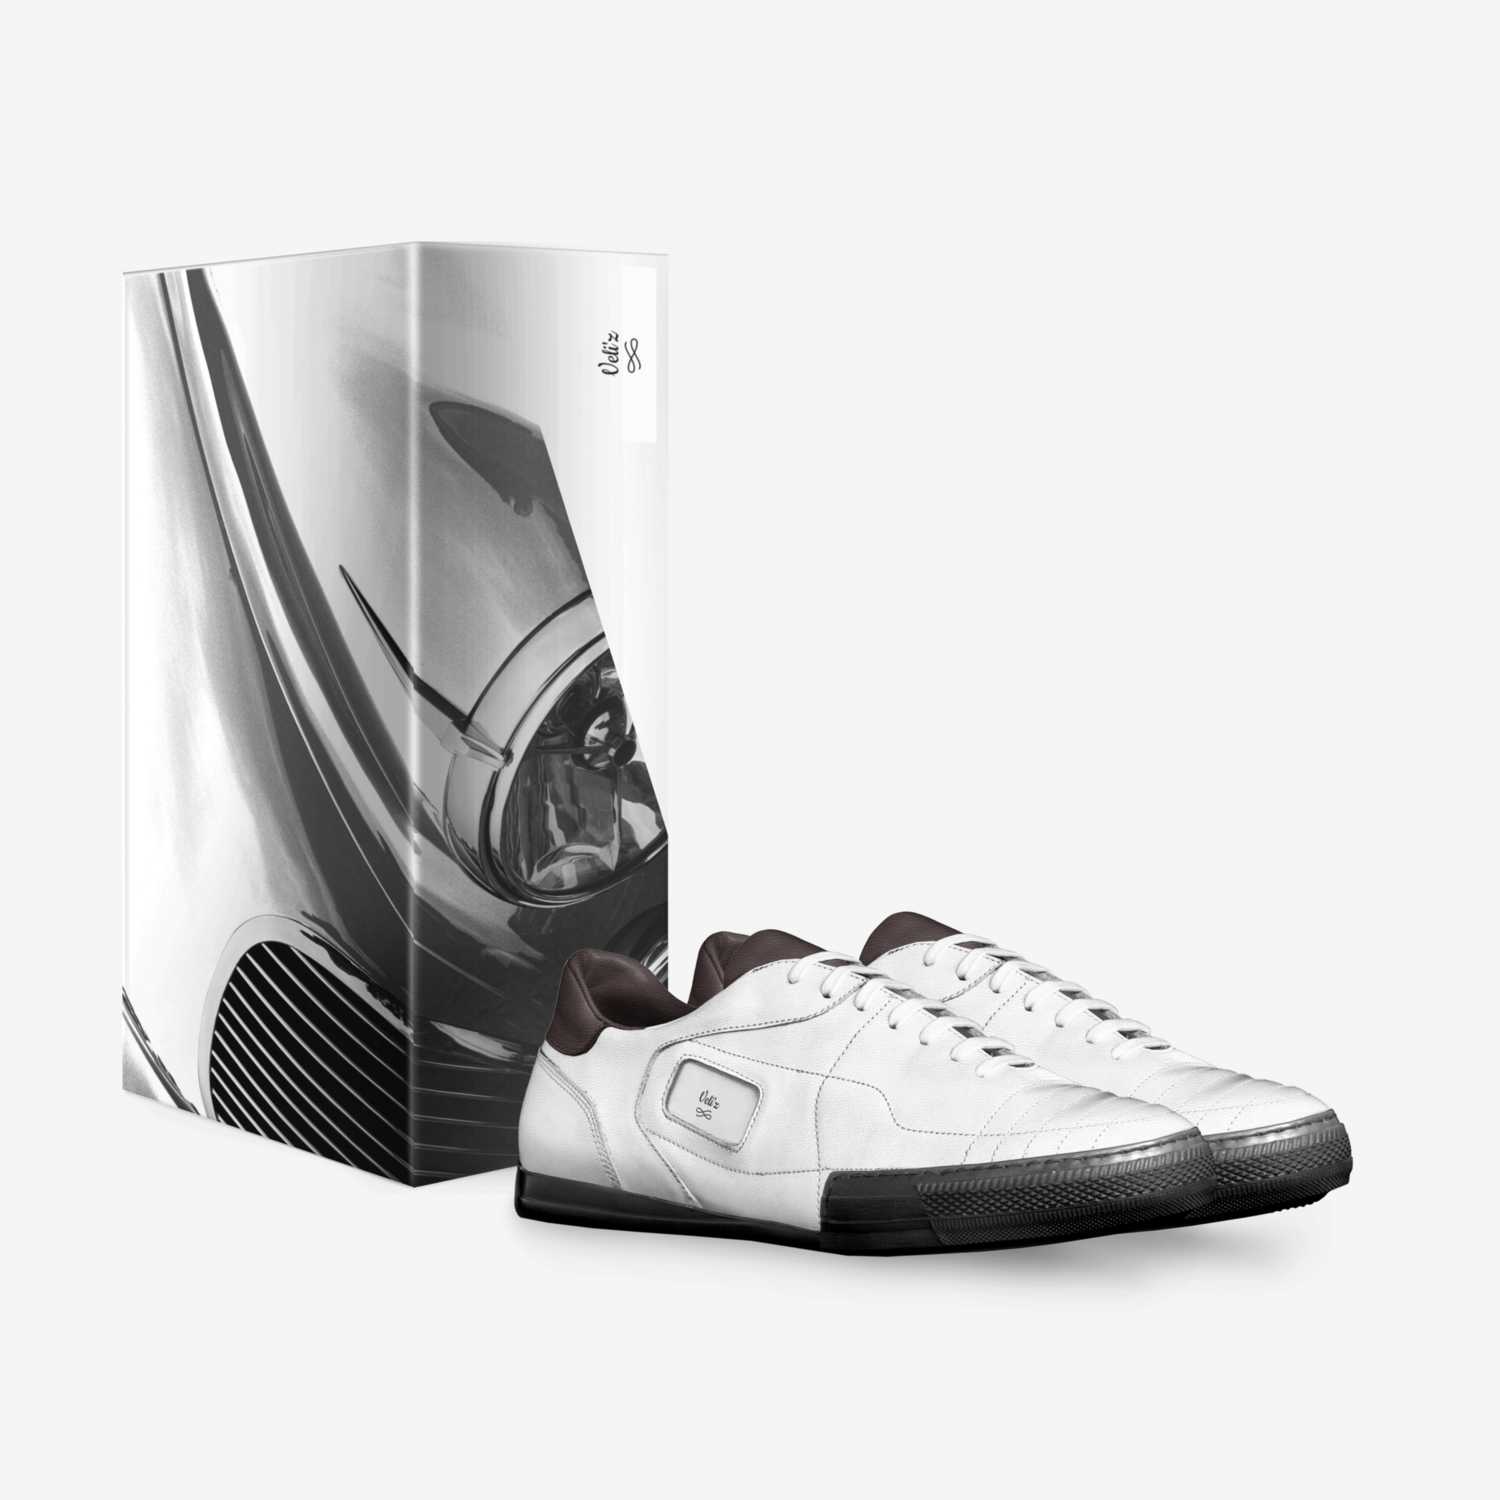 z'Veli'z custom made in Italy shoes by Bugzveli Tanksley | Box view